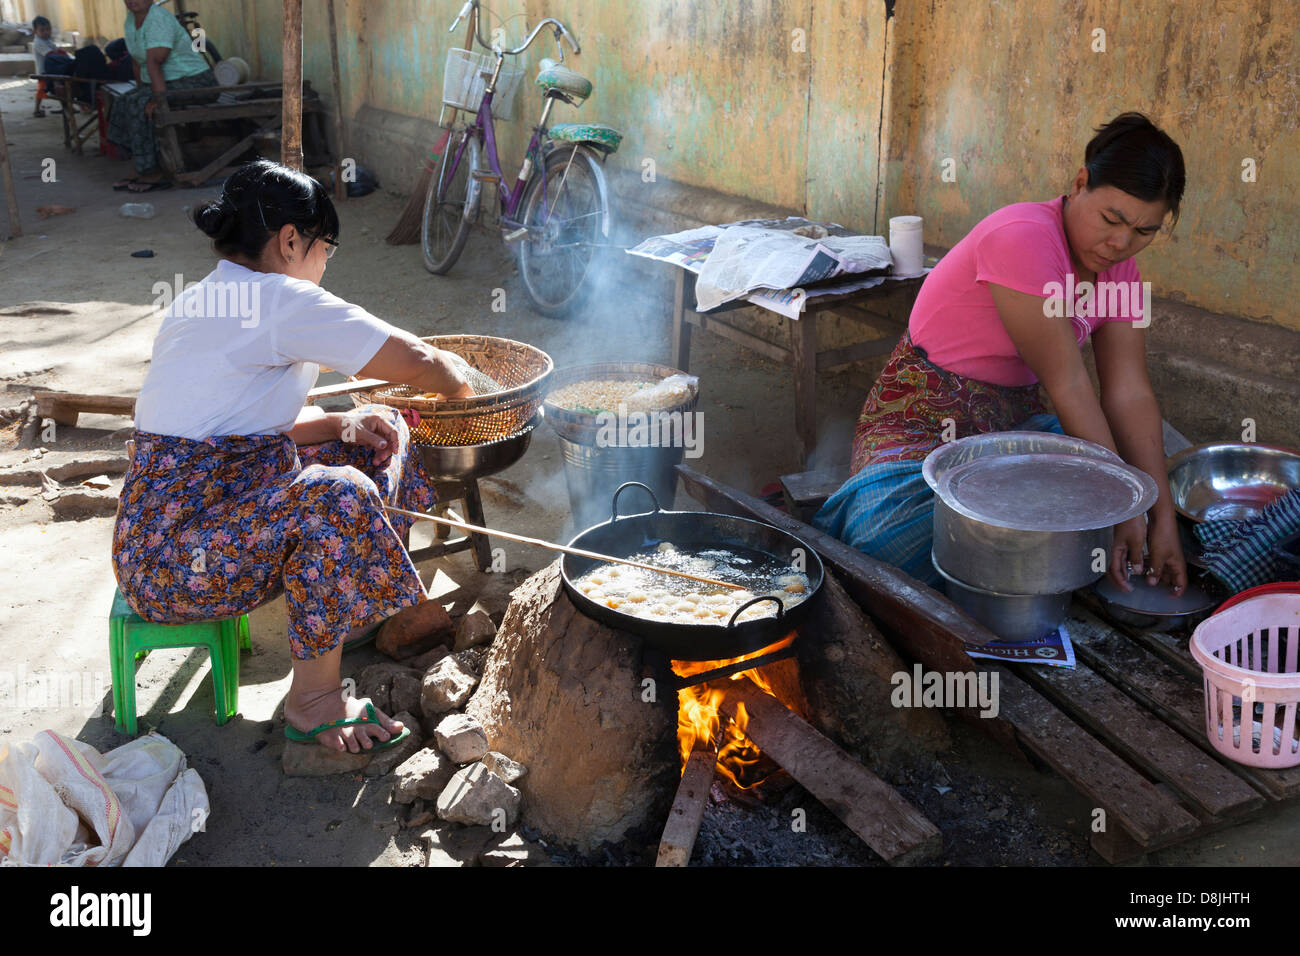 Fried fast food snacks in the street, Mandalay Myanmar Stock Photo